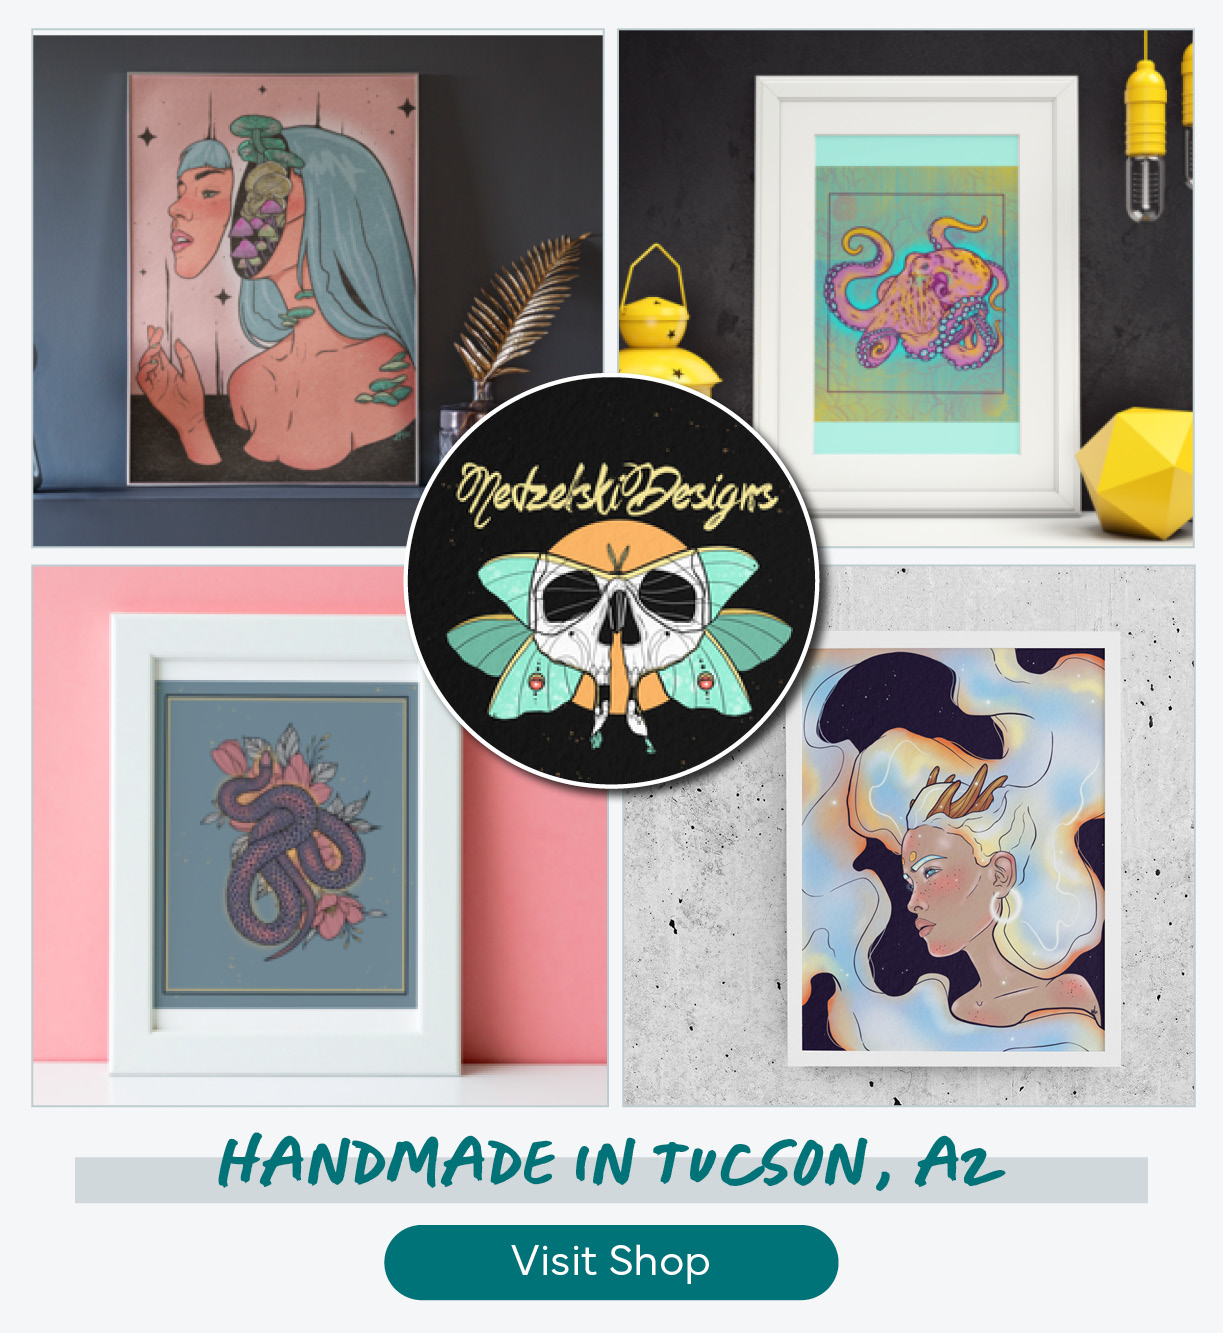 Handmade in Arizona: Art by Nedzelski Designs